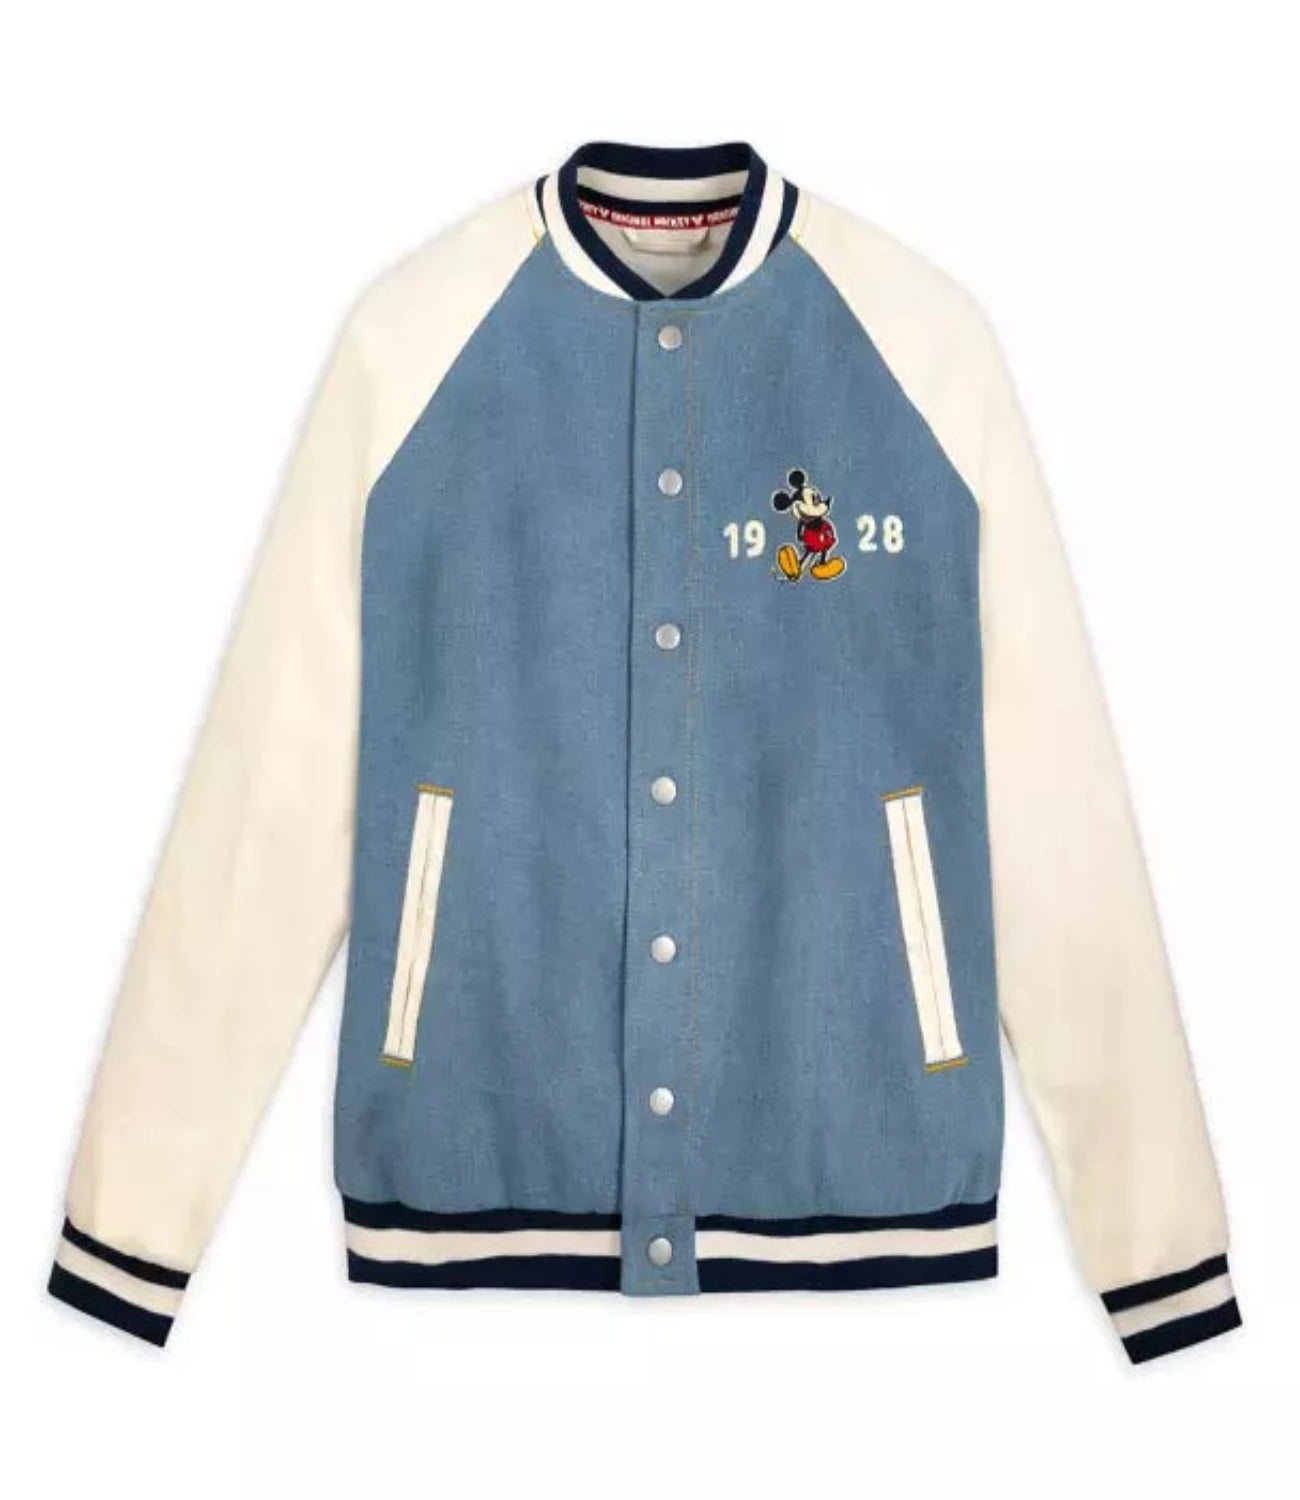 Disneyland Mickey Mouse Varsity Jacket